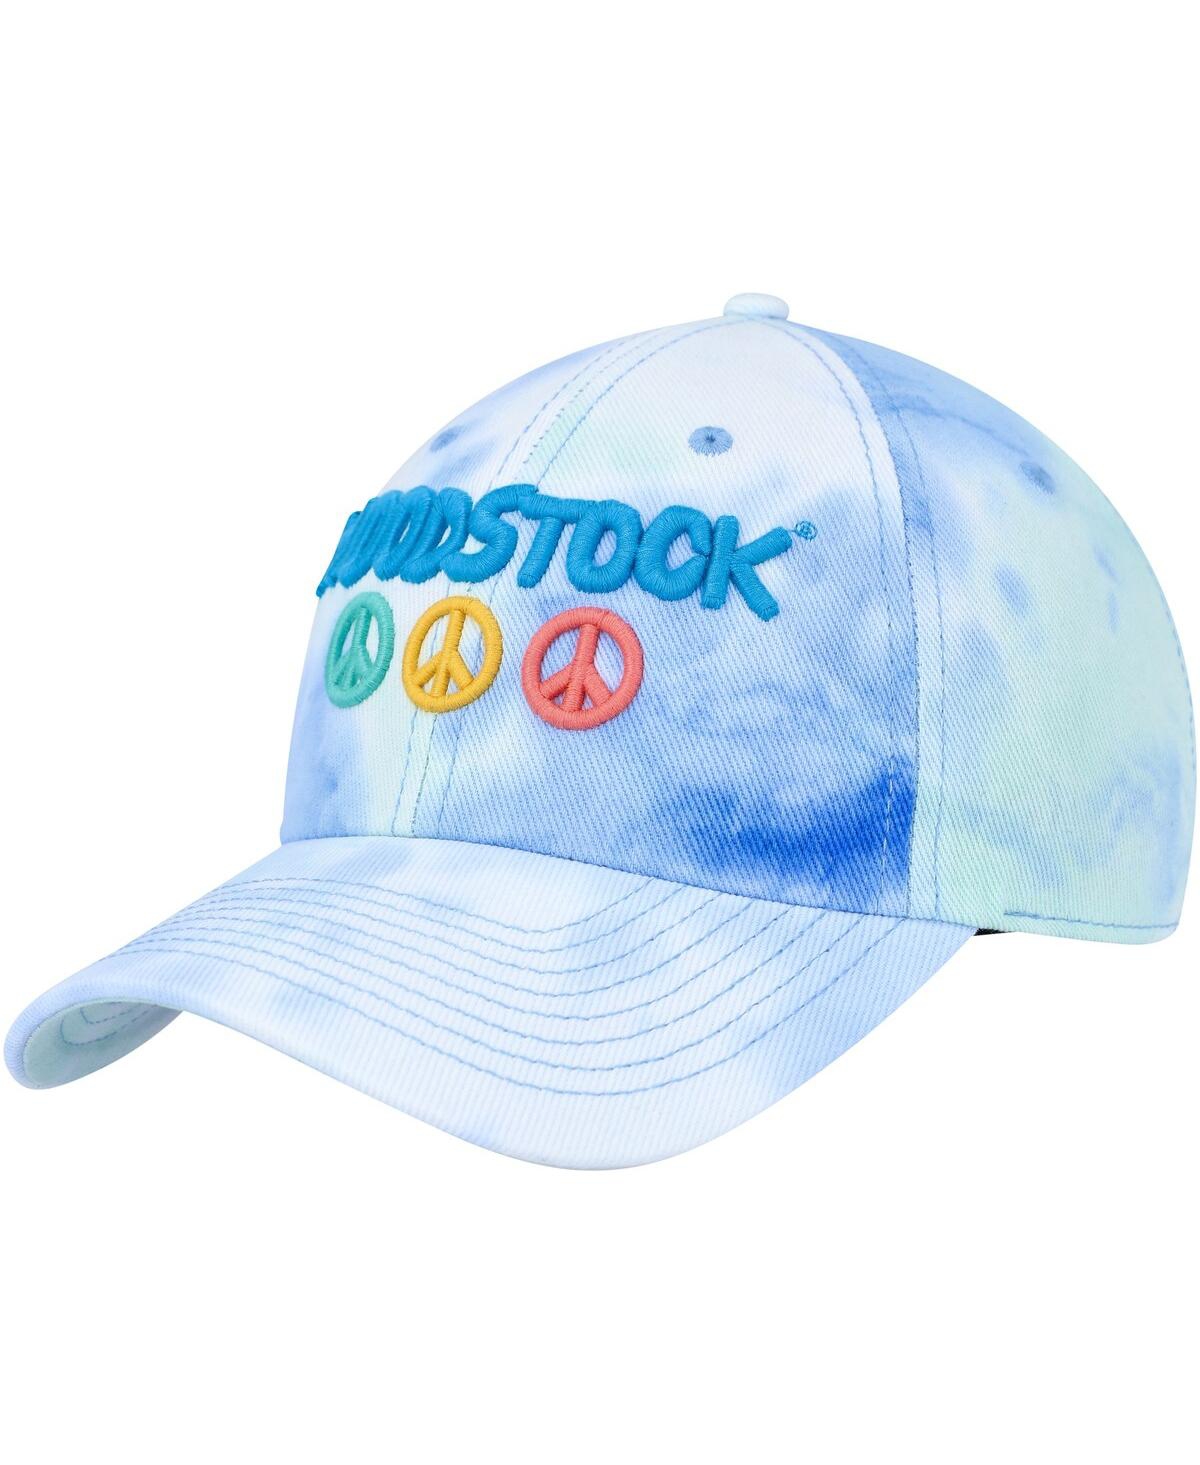 American Needle Men's  Blue Woodstock Ballpark Adjustable Hat